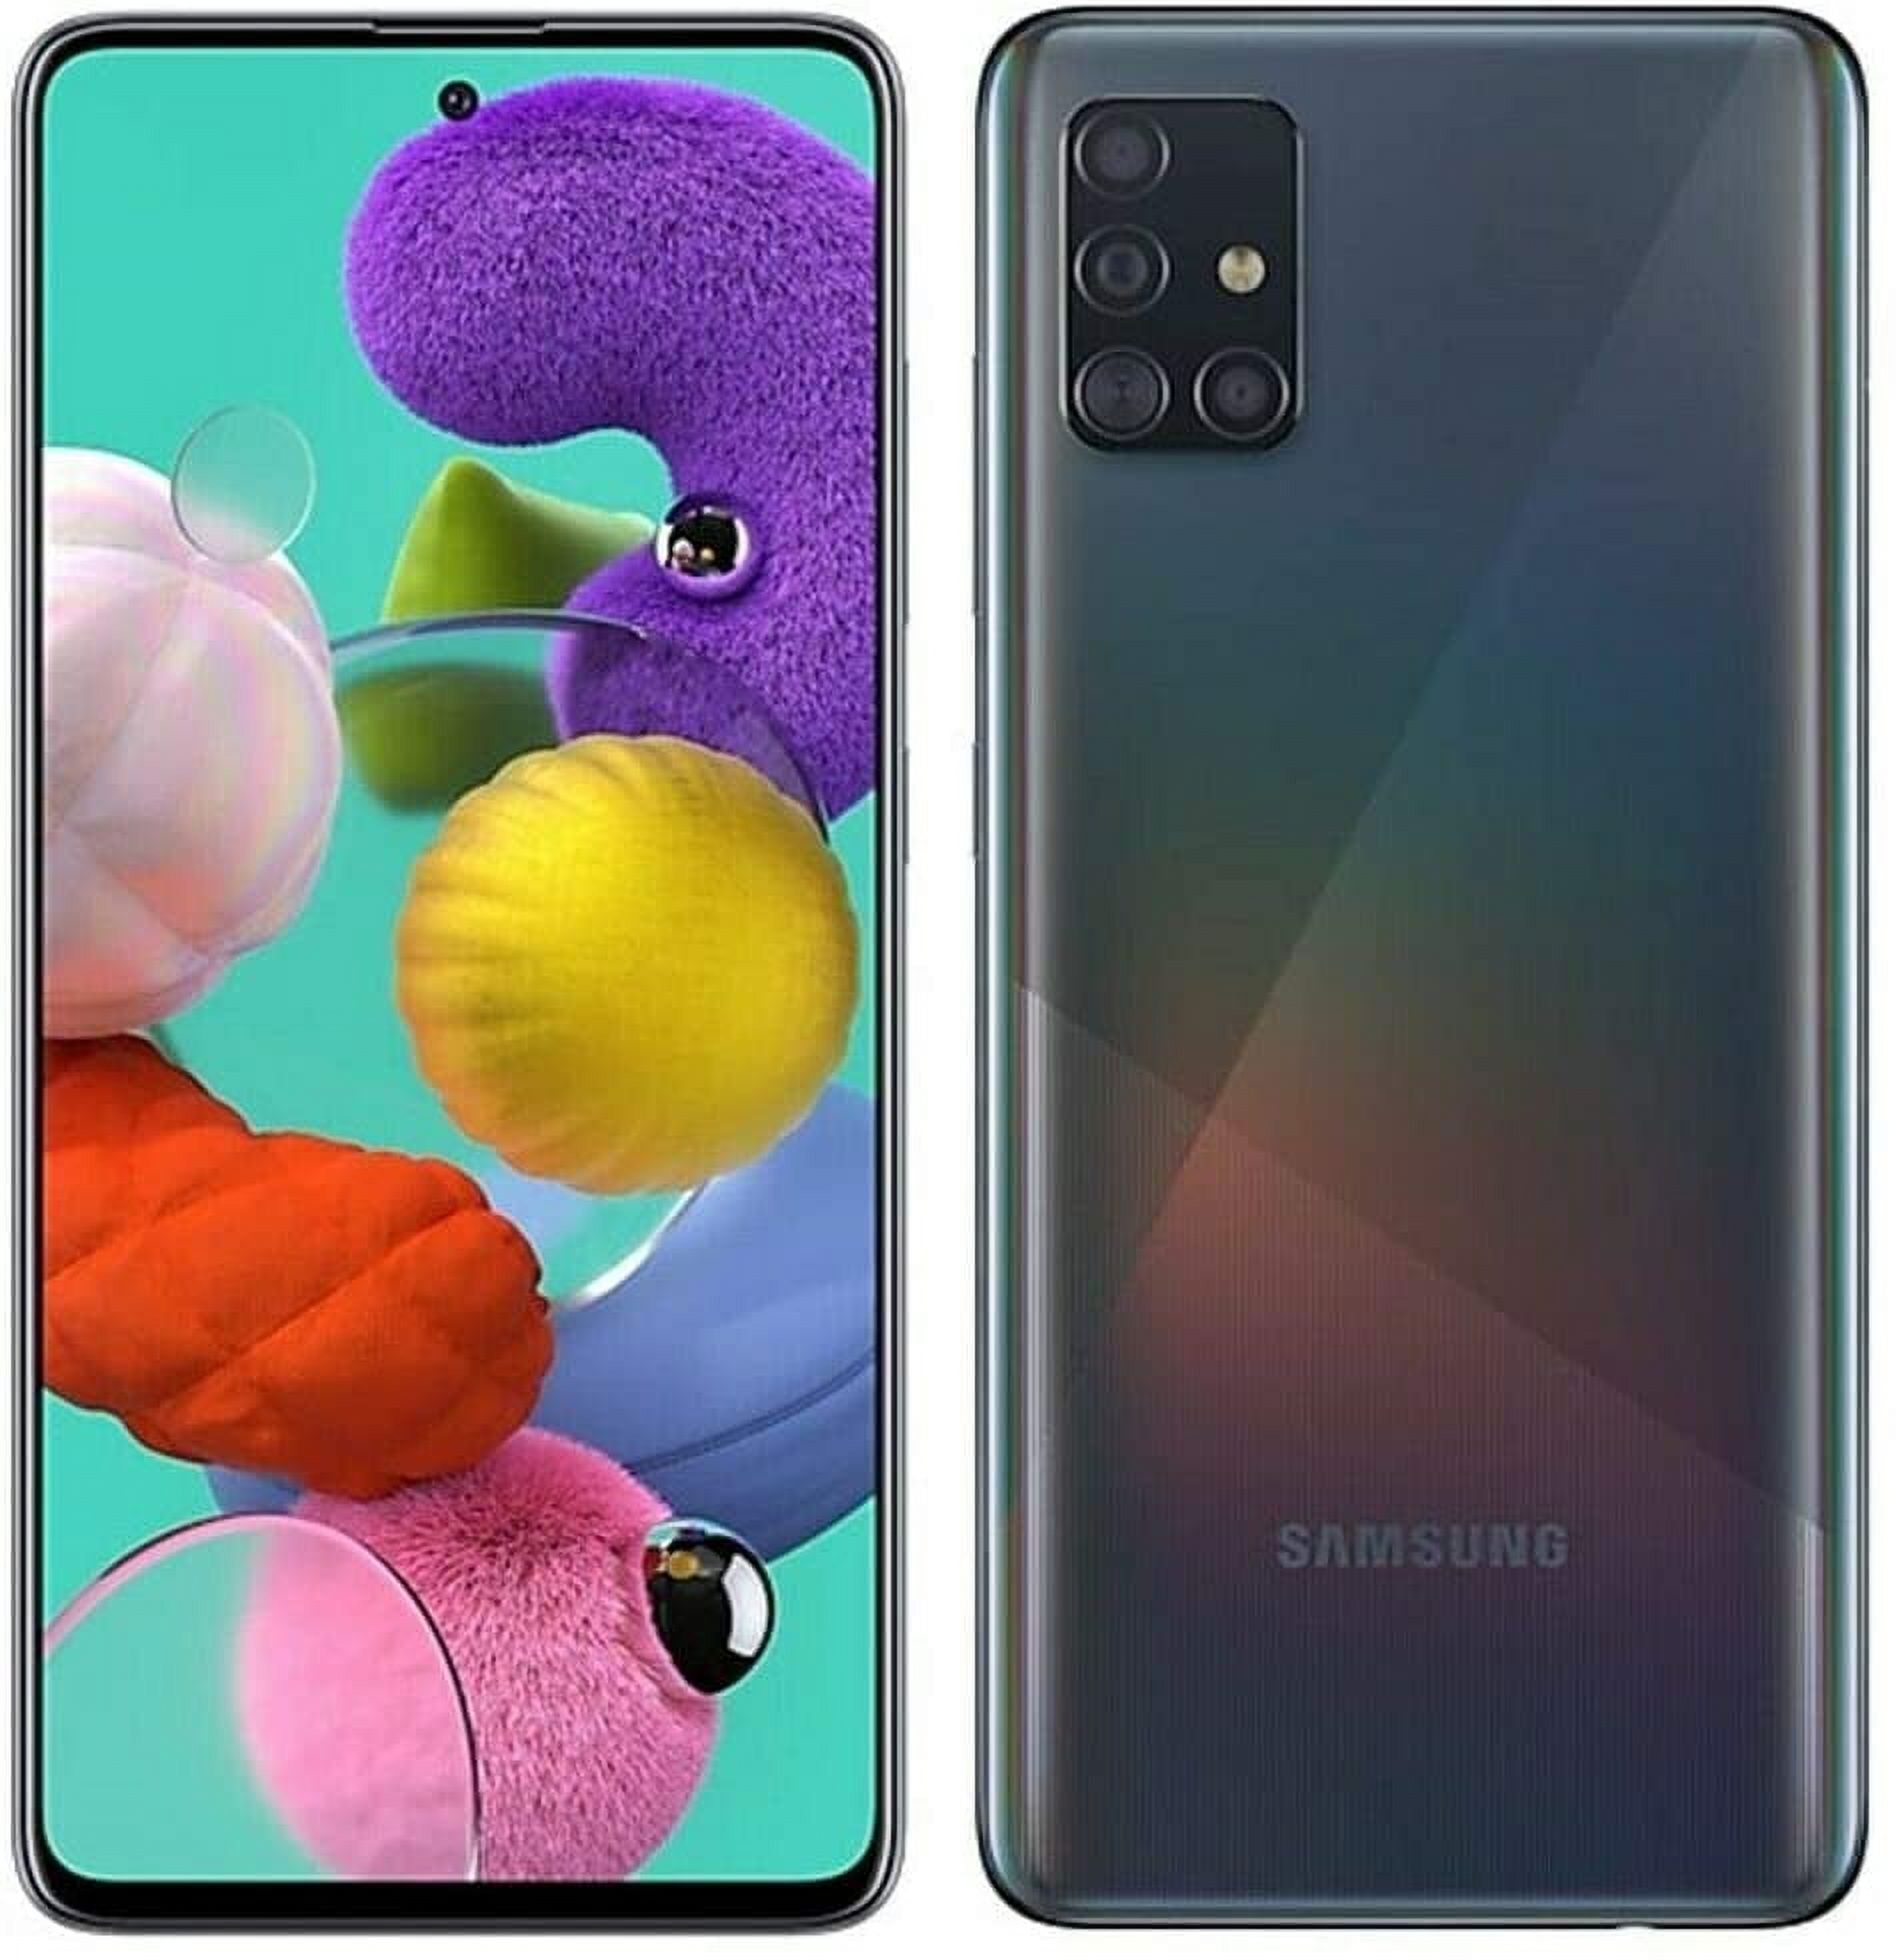 Samsung Galaxy A51 - Smartphone - 4G LTE - 128 GB - microSD slot - 6.5" - 2400 x 1080 pixels - Super AMOLED - RAM 4 GB (32 MP front camera) - 4x rear cameras - Android - Sprint - Prism crush black - image 1 of 7